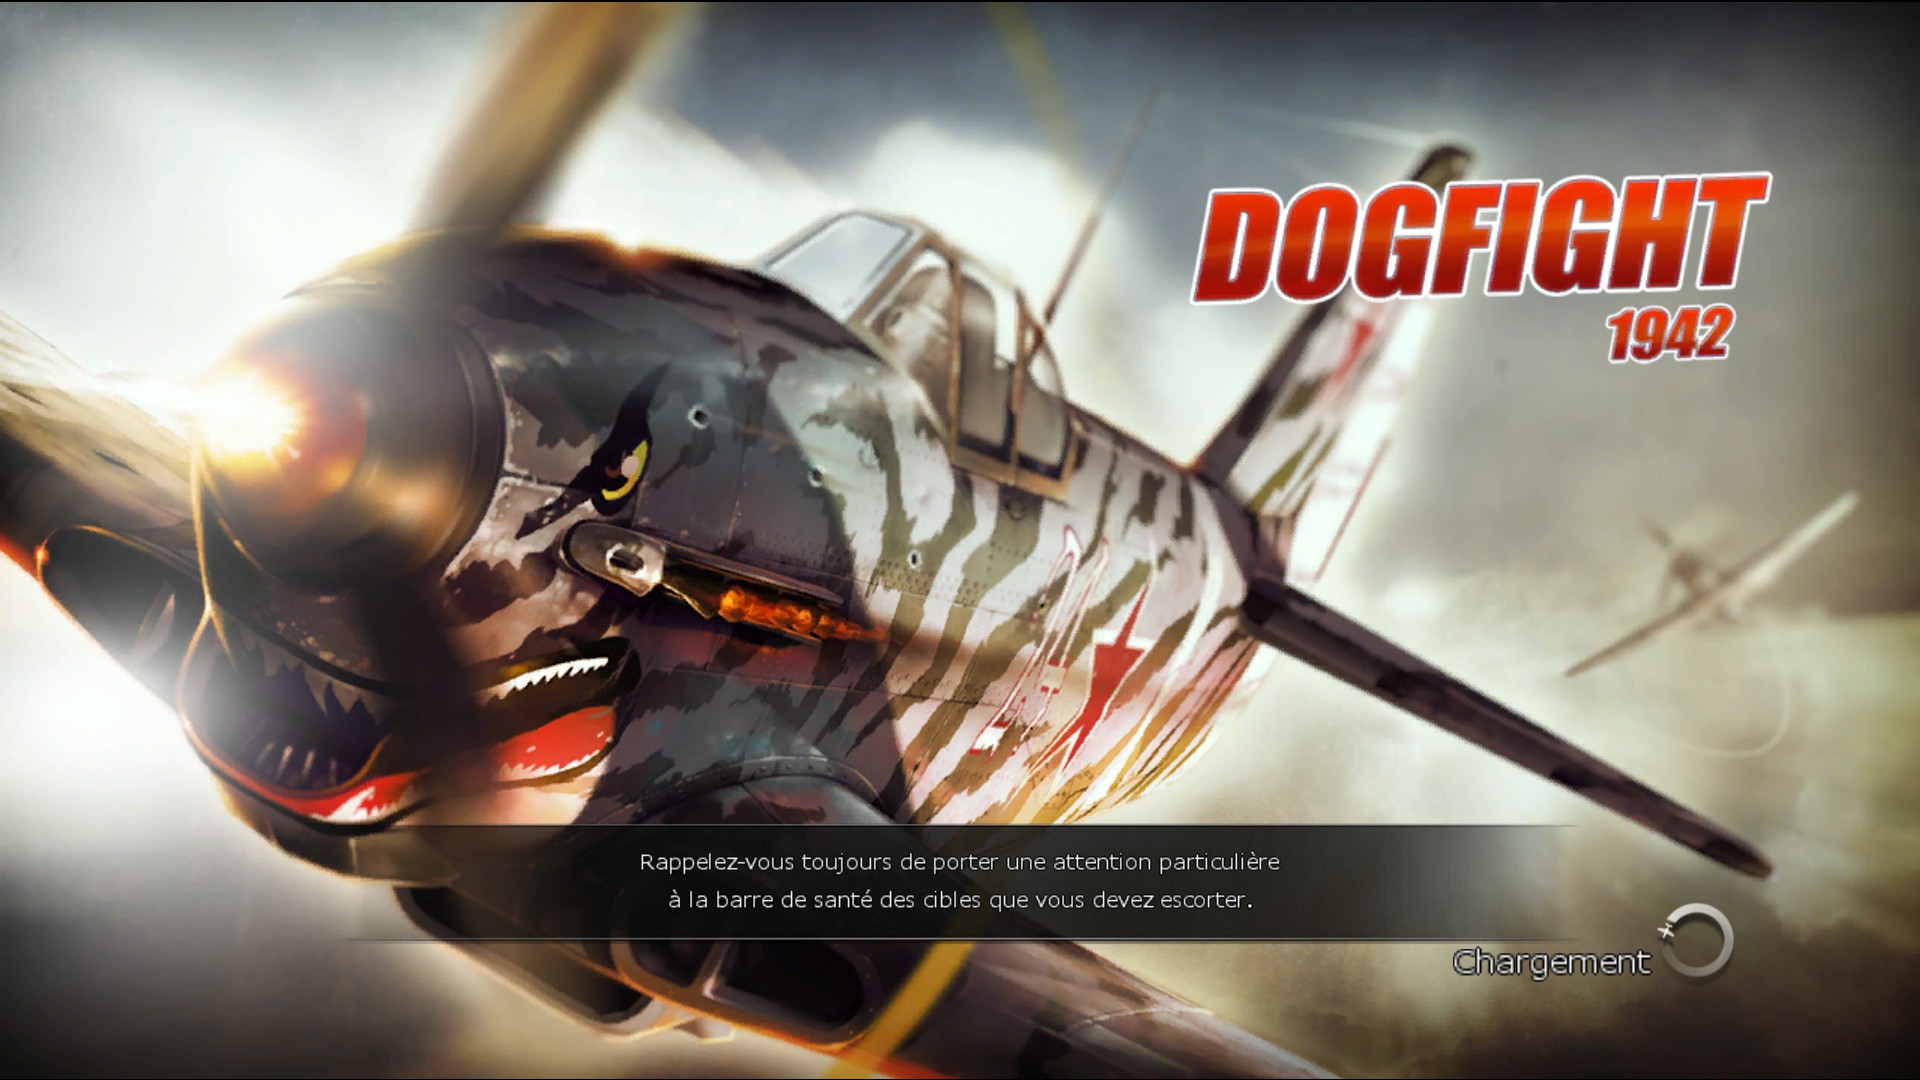 Догфайт. Догфайт 1942. Dogfight 1942 Limited Edition. Dogfight 1942 геймплей. Dogfight 1942 ps3.